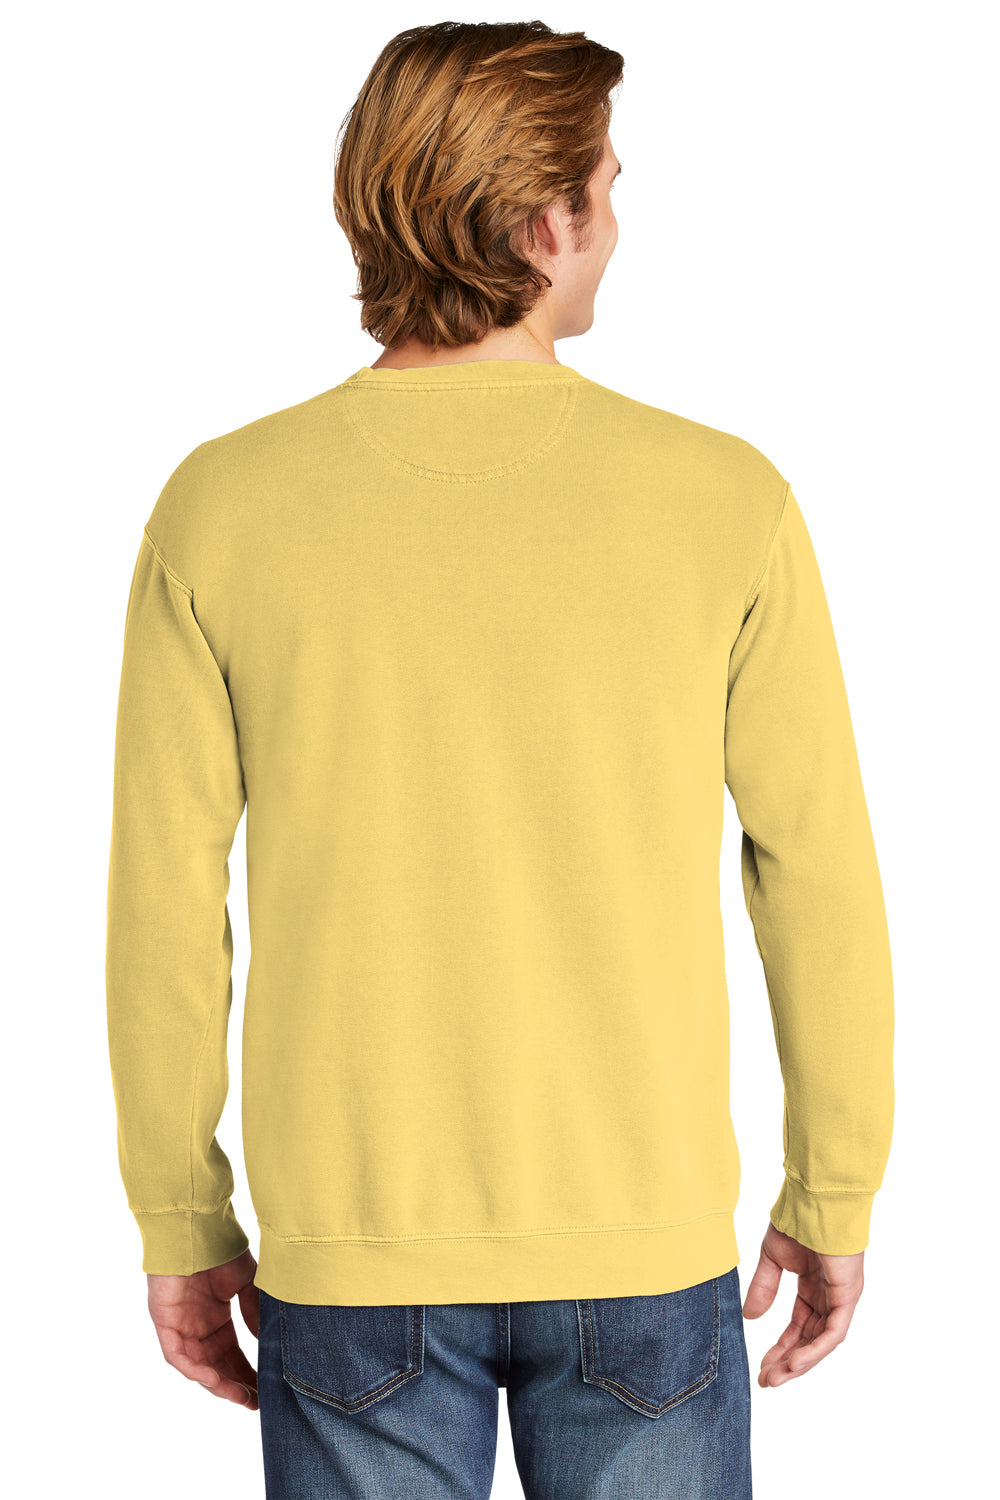 Comfort Colors Mens Crewneck Sweatshirt Butter Yellow Back